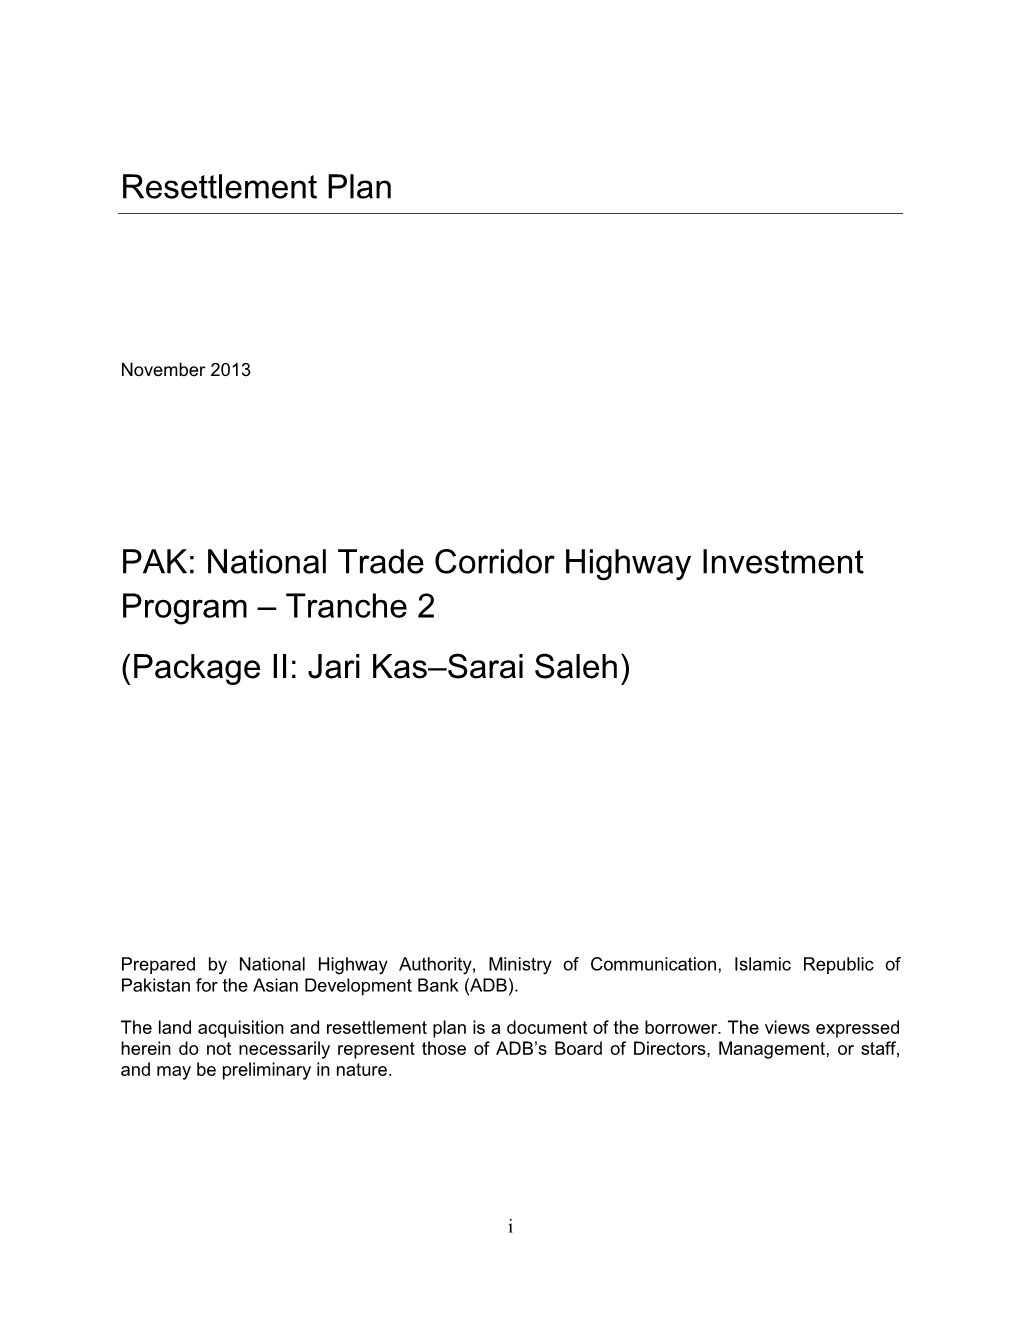 National Trade Corridor Highway Investment Program – Tranche 2 (Package II: Jari Kas–Sarai Saleh)